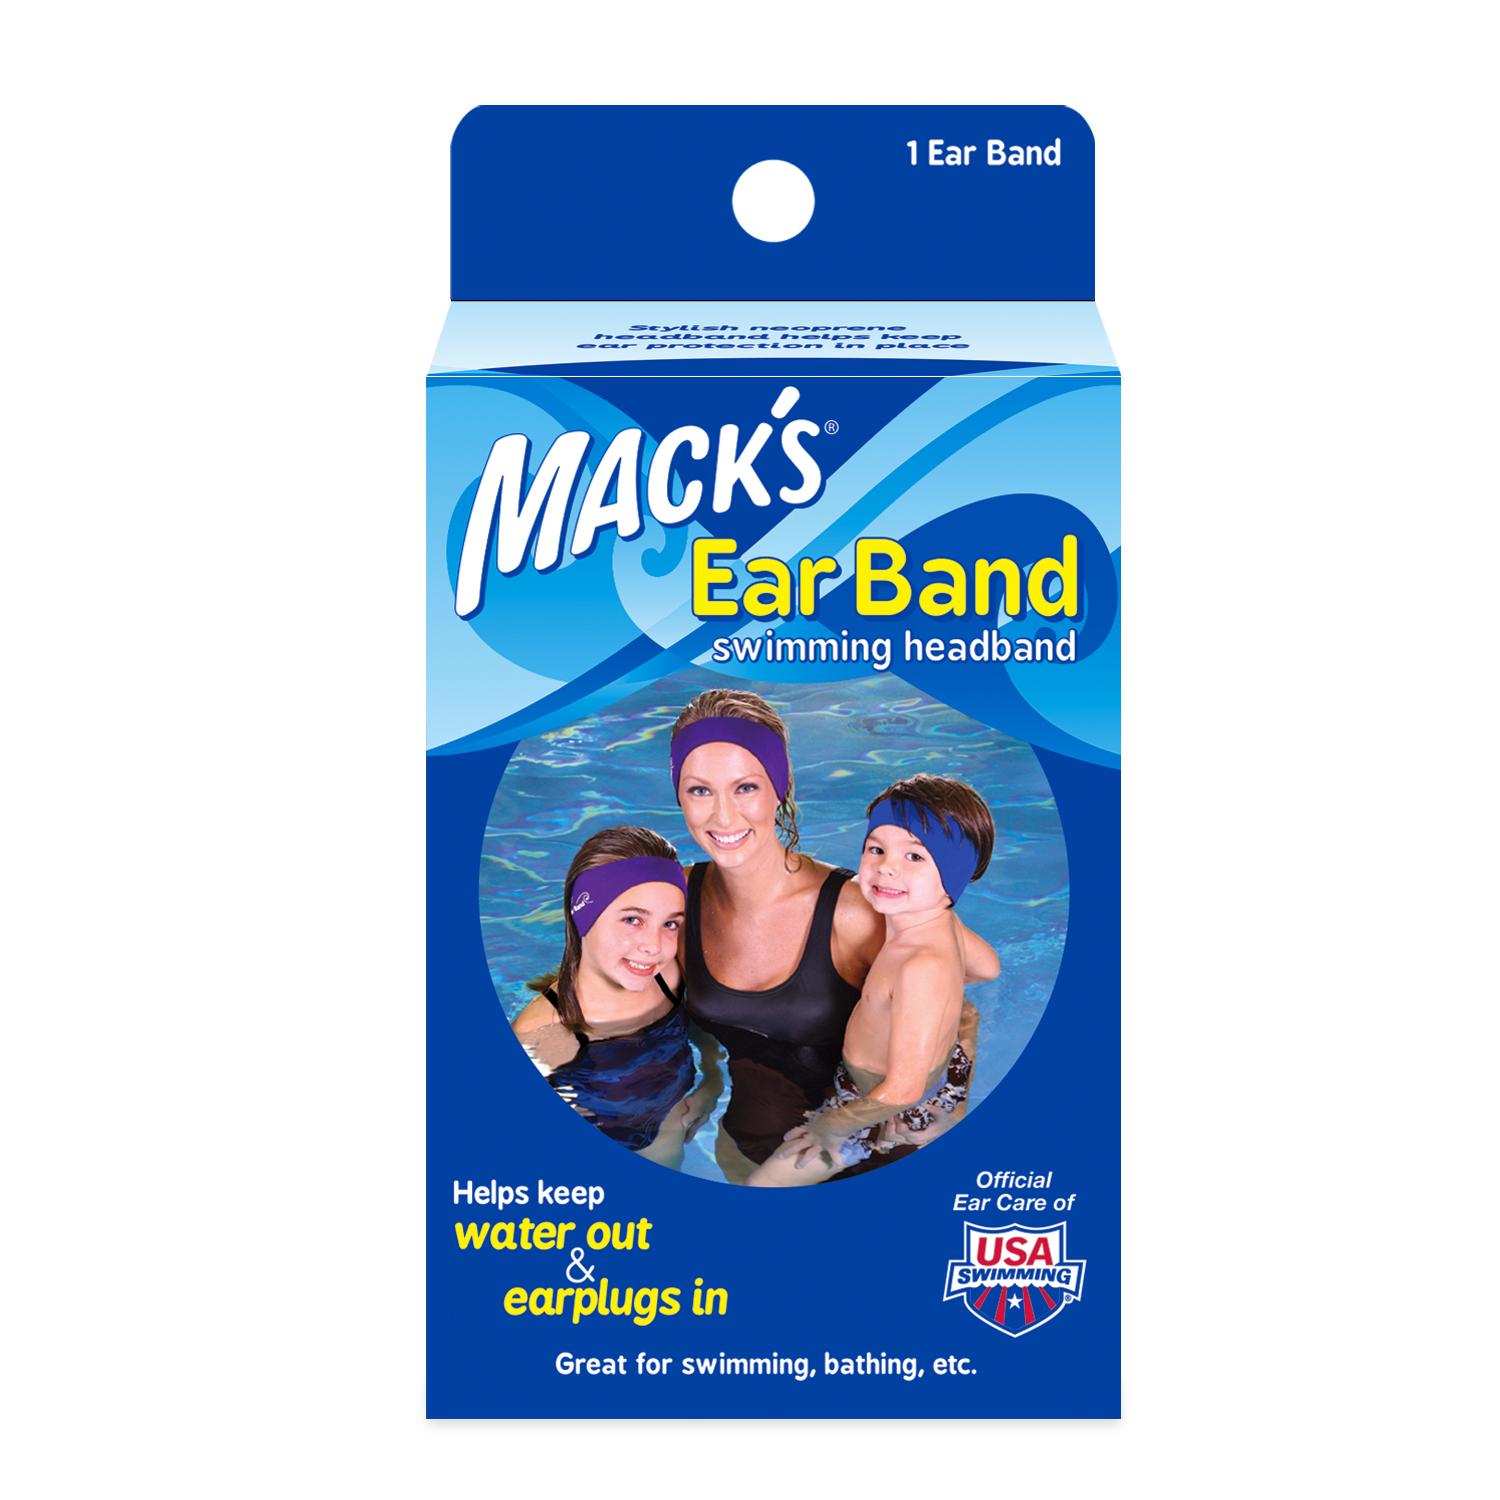 4 Pcs Adult Swimming Headband Adjustable Swimmer's Headband Waterproof Swim Headbands for Women Men Swim Ear Band for Bath Pool Beach Ear Protection Keep Water Out Secure Earplug L Camouflage 